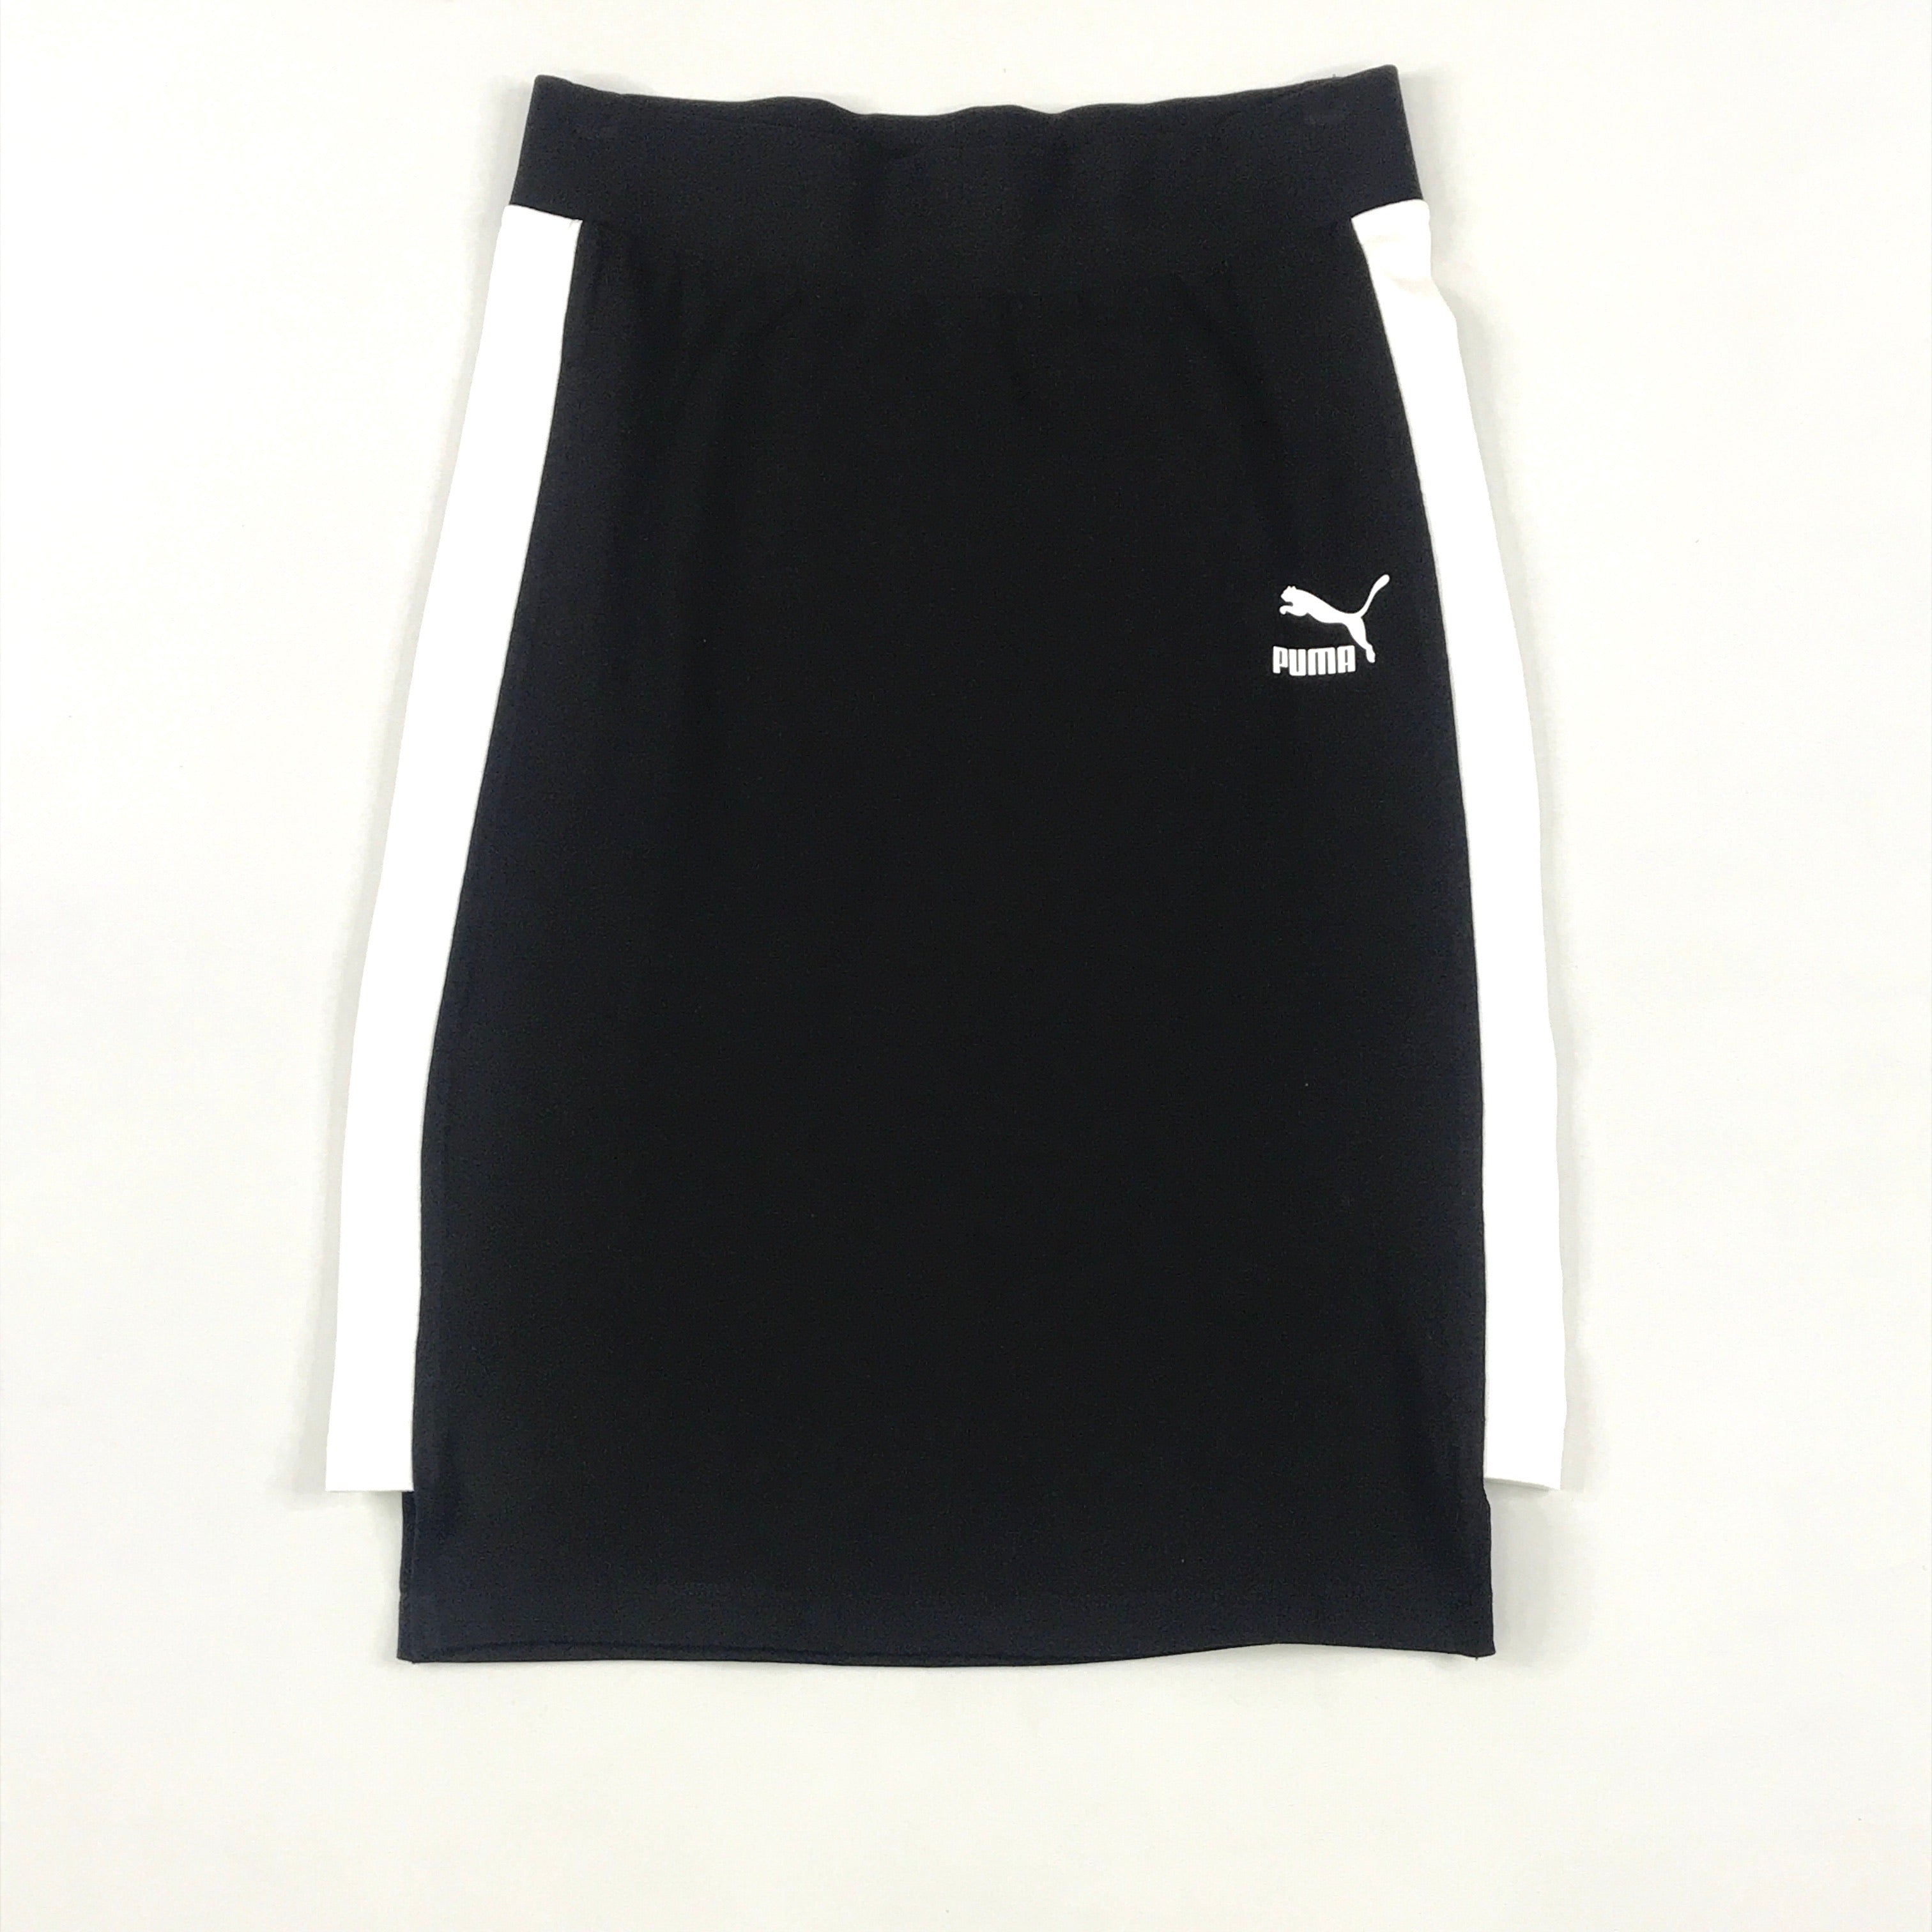 Puma classic tight skirt in black